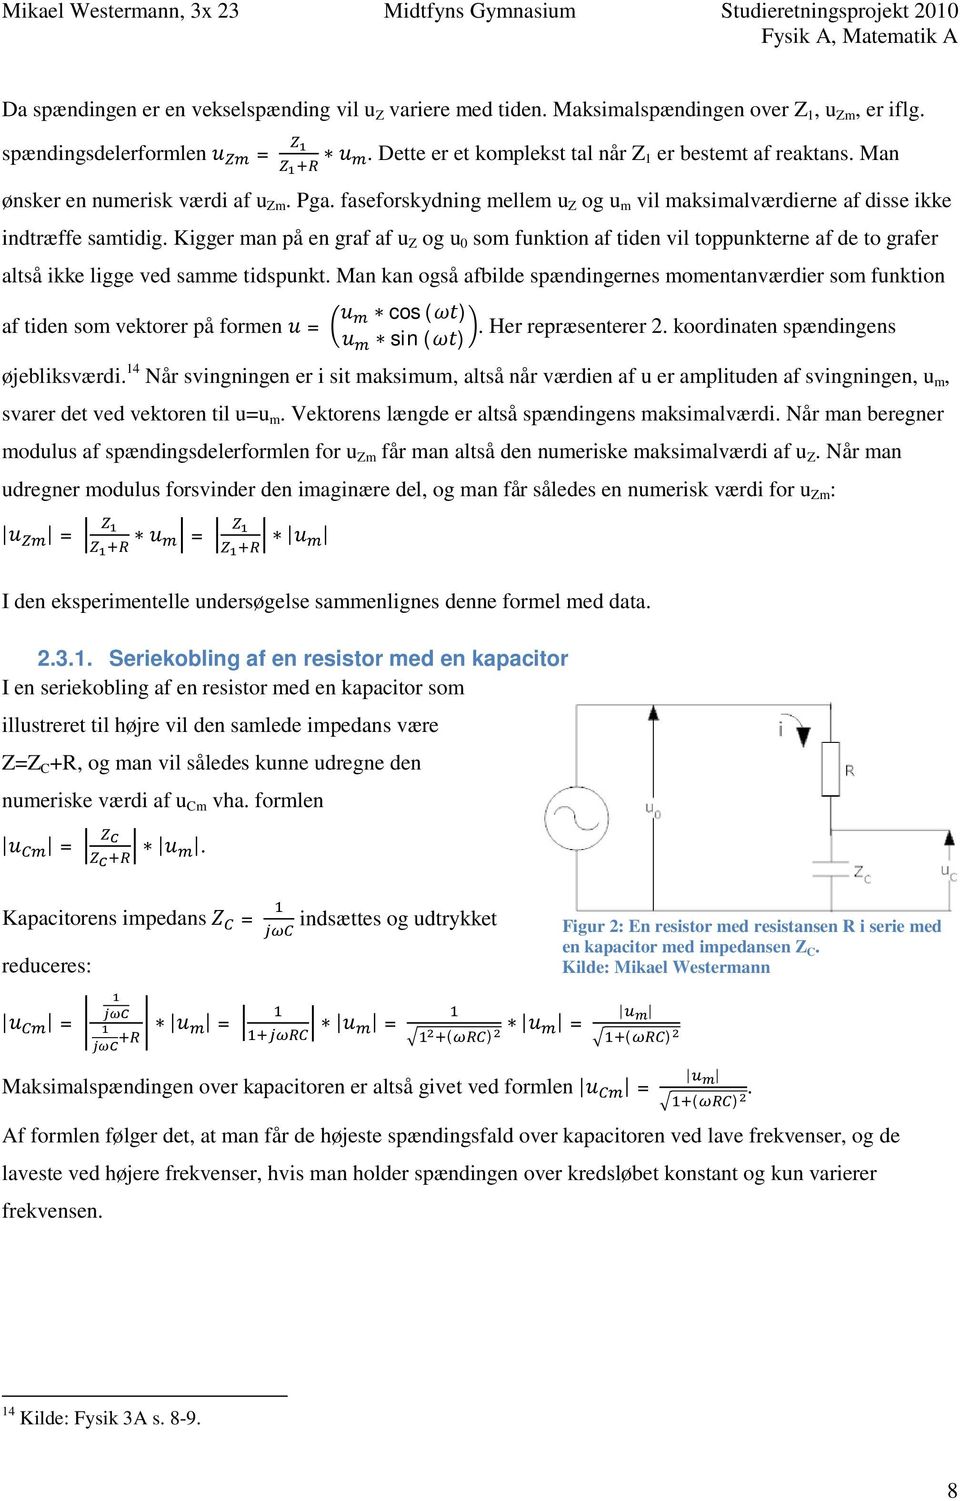 Abstract. Mikael Westermann, 3x 23 Midtfyns Gymnasium Studieretningsprojekt  2010 Fysik A, Matematik A - PDF Free Download